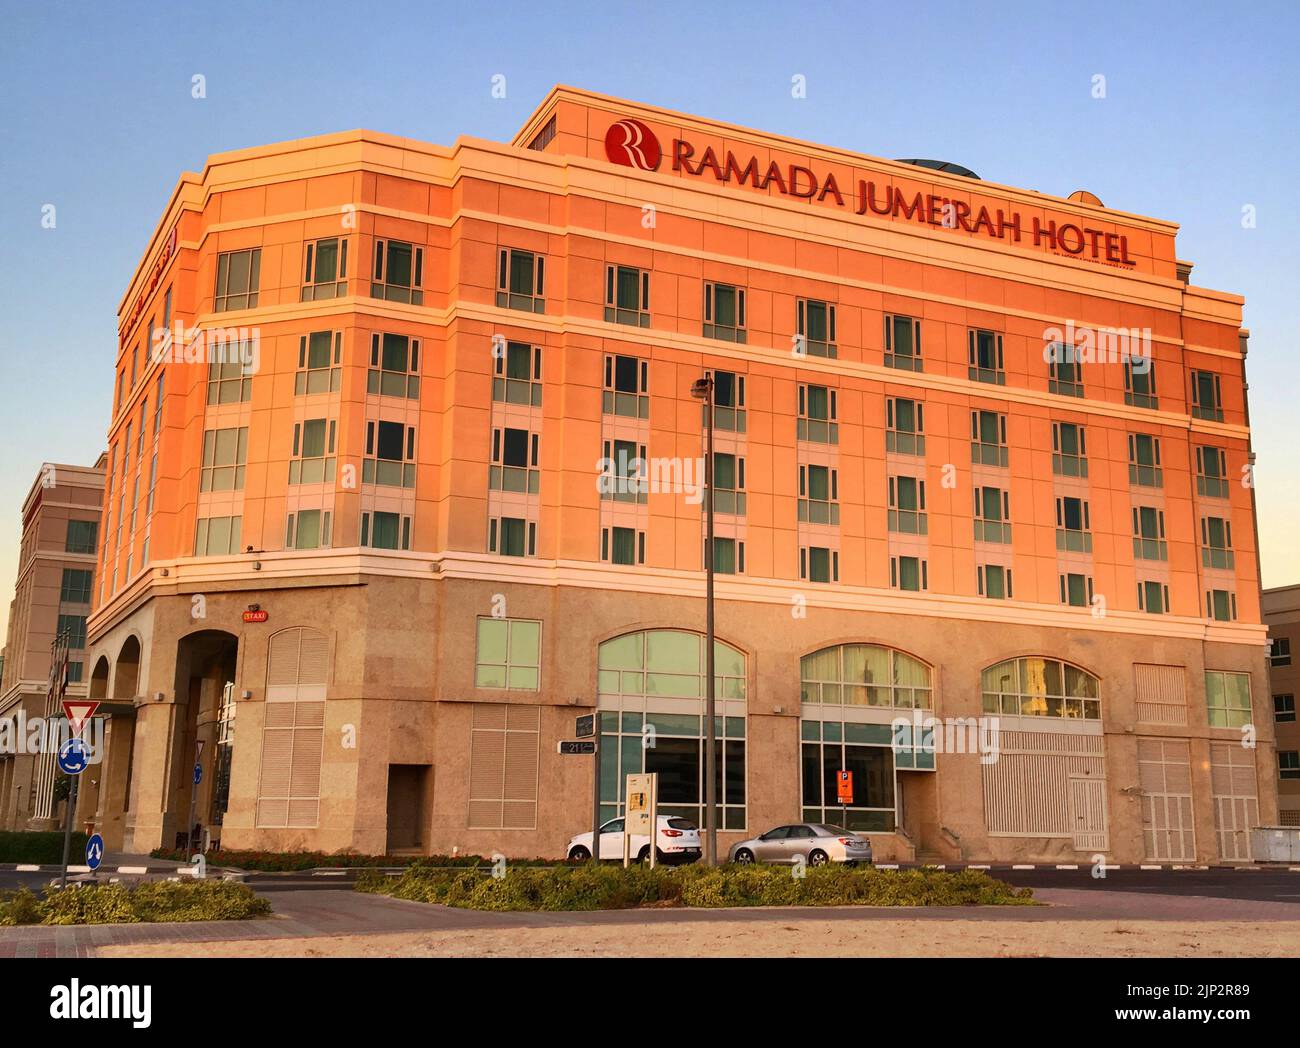 The Ramada Jumeirah Hotel in Dubai, UAE. Stock Photo